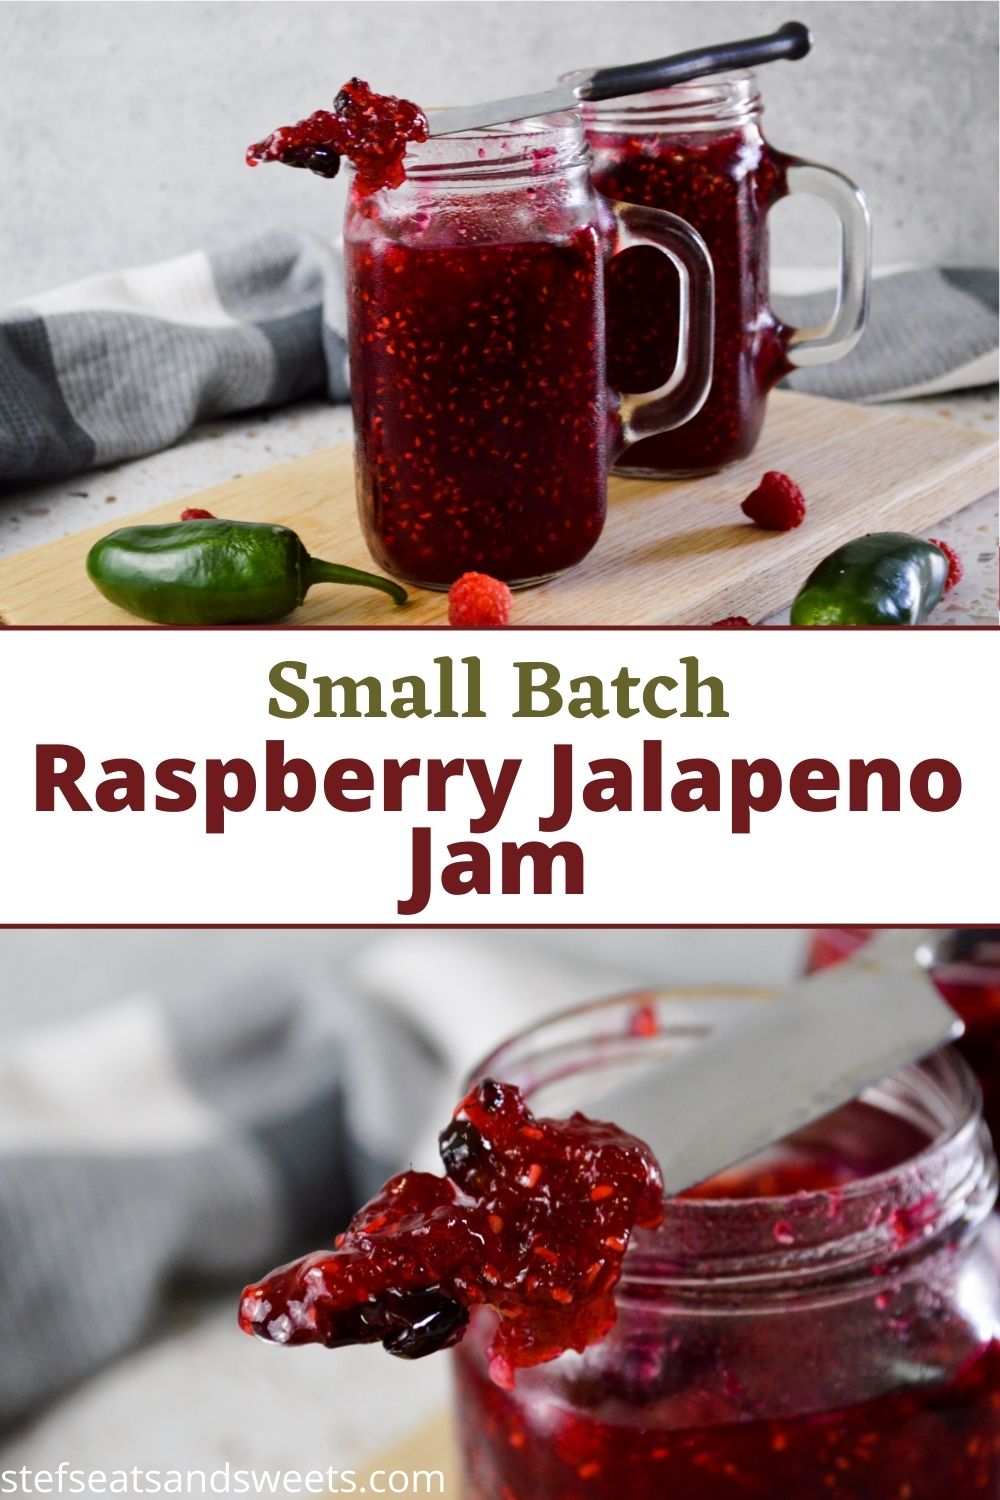  how to make Small Batch Raspberry Jalapeno Jam